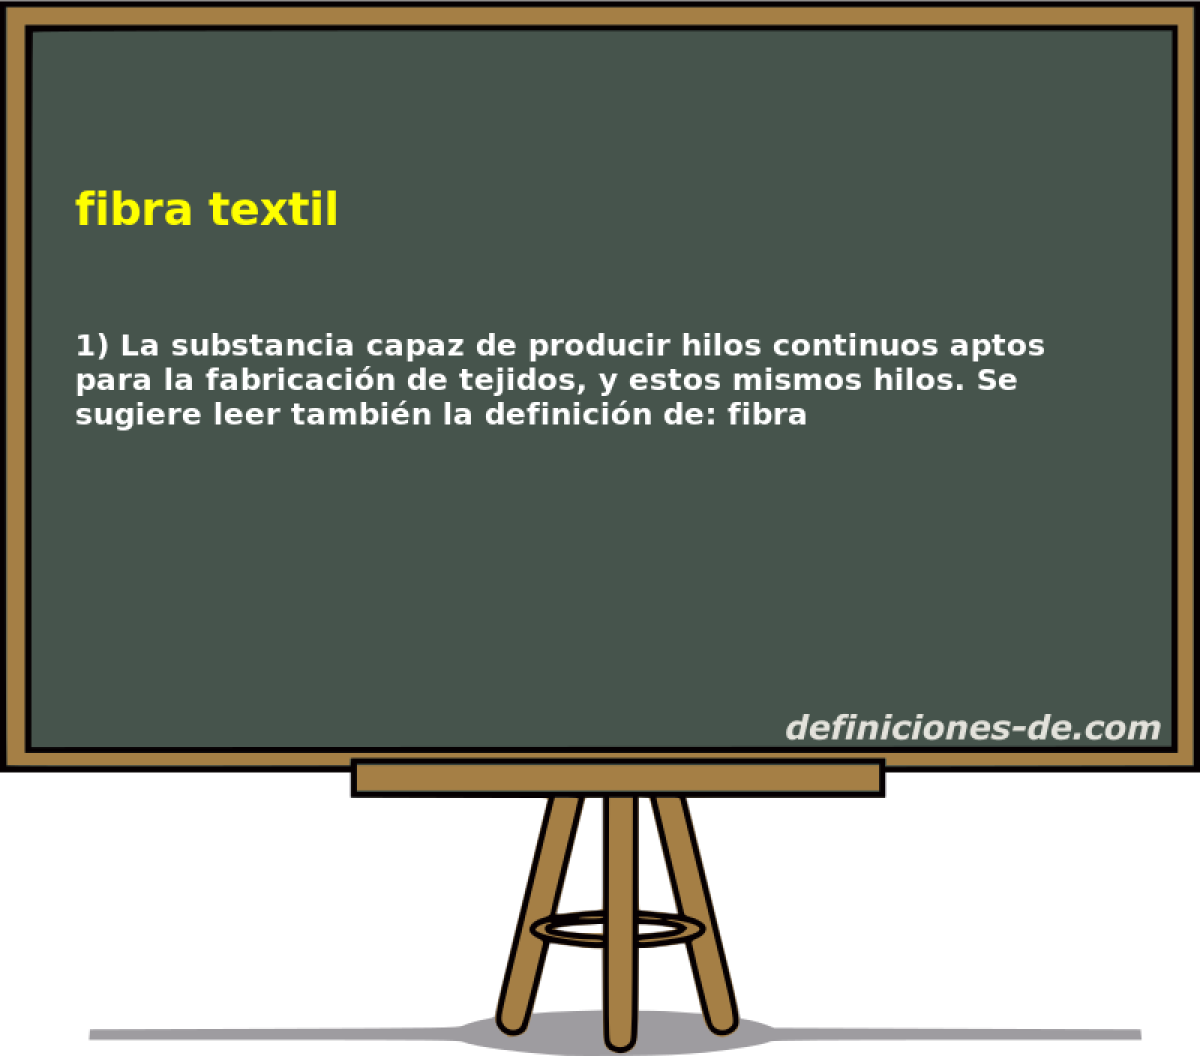 fibra textil 